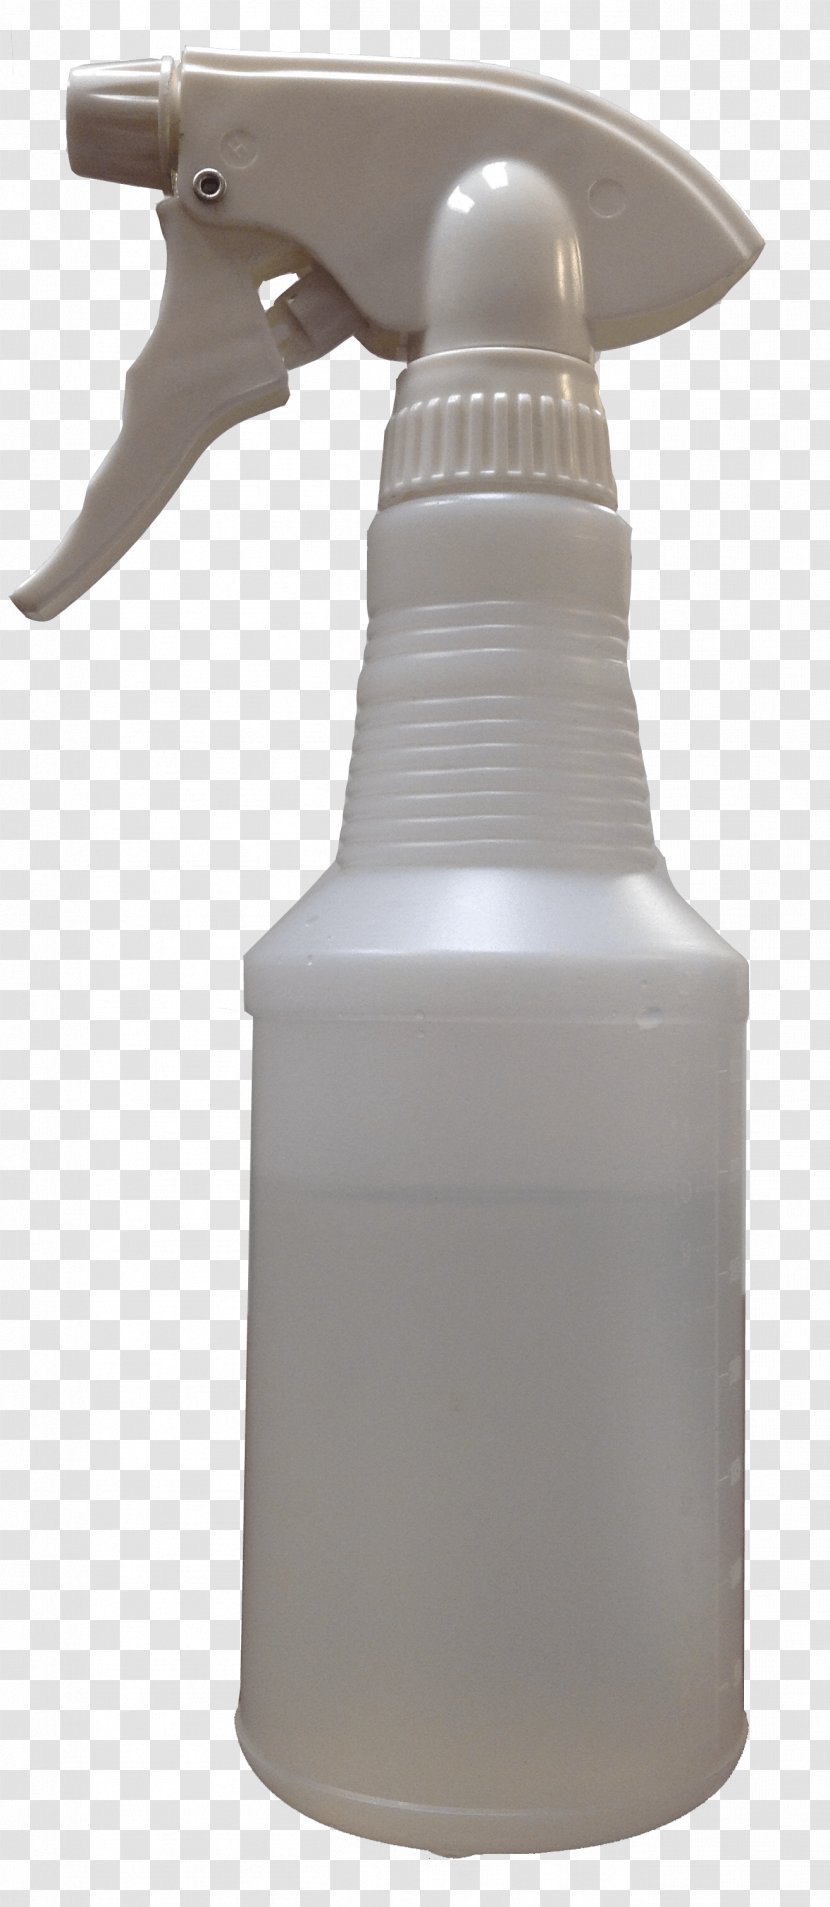 Spray Bottle Cleaning Aerosol - Environmental Labeling Transparent PNG